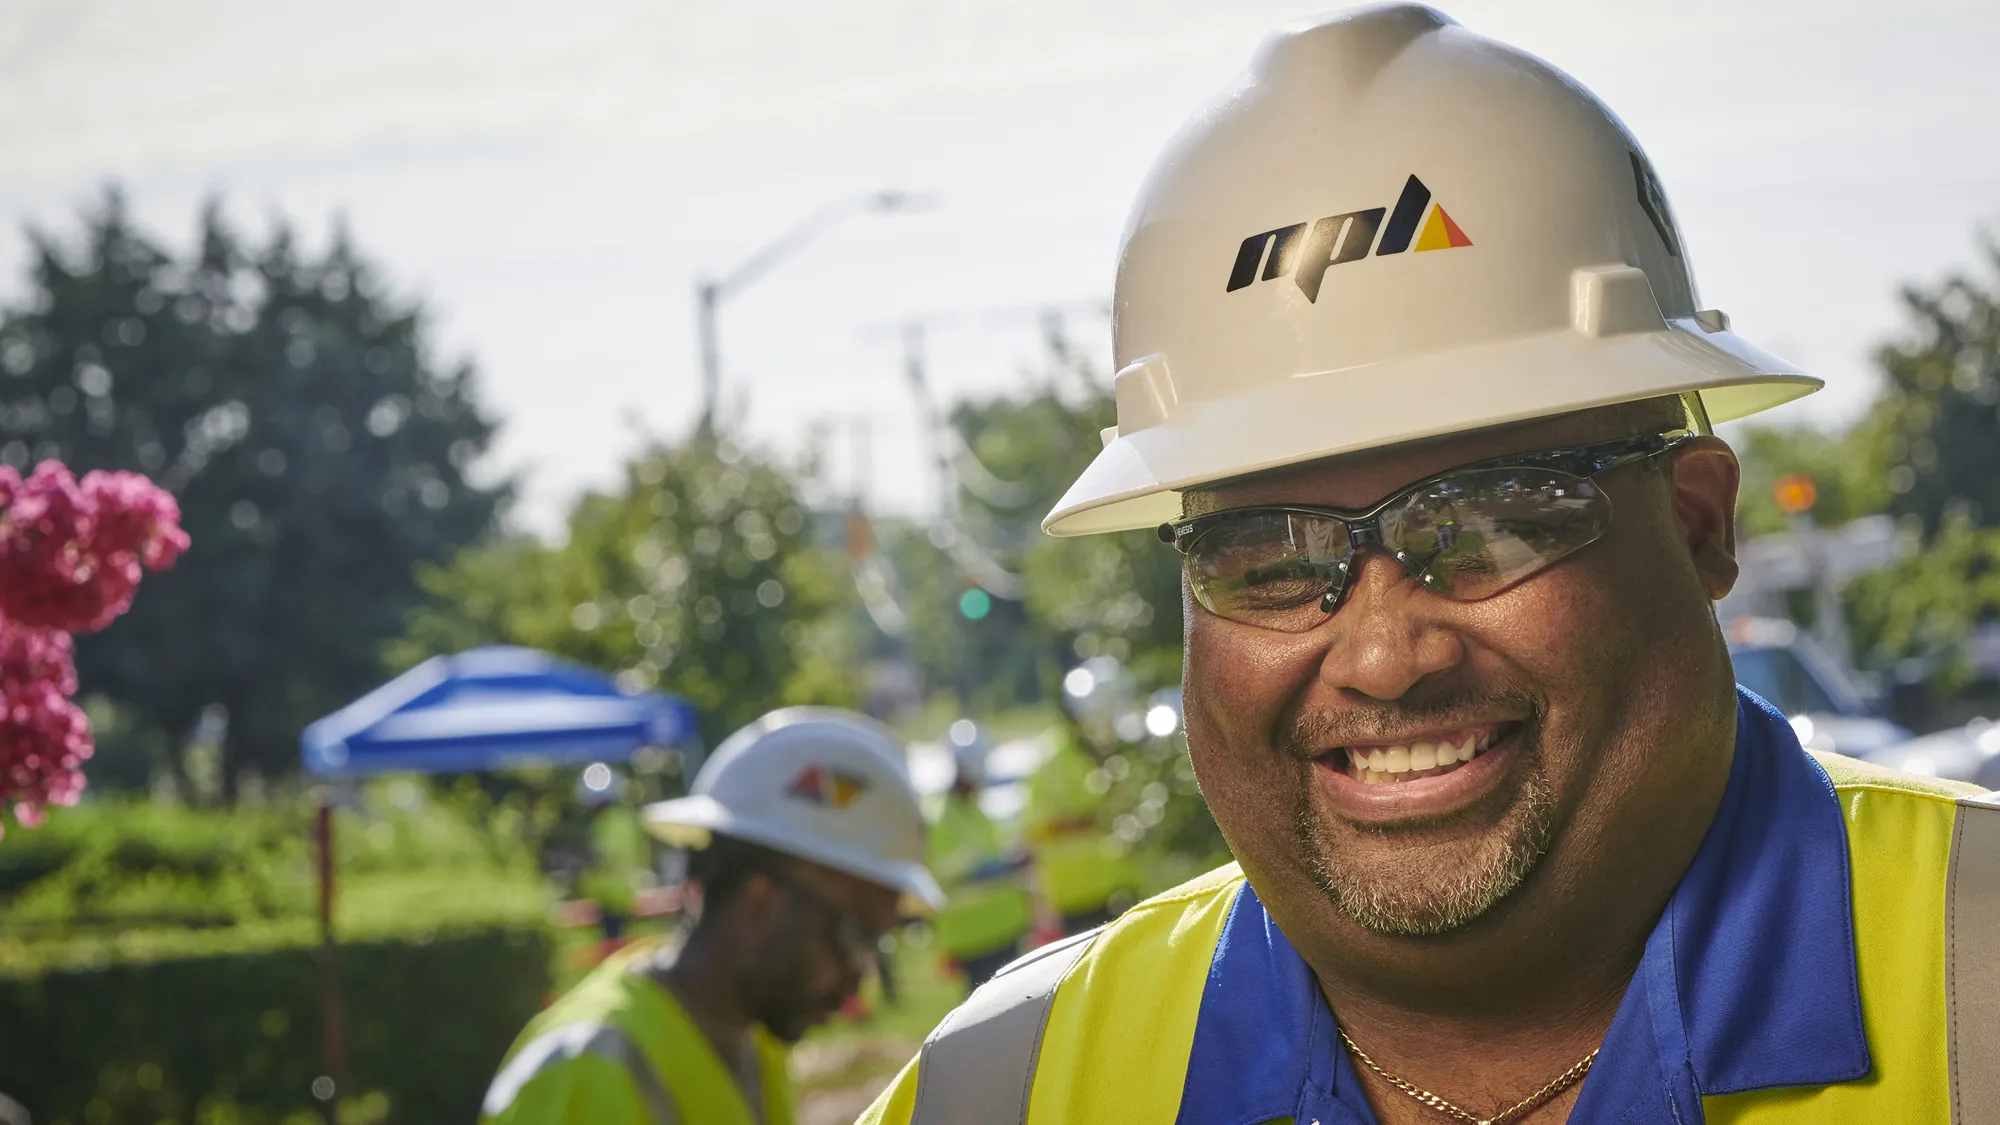 Construction crew member smiling